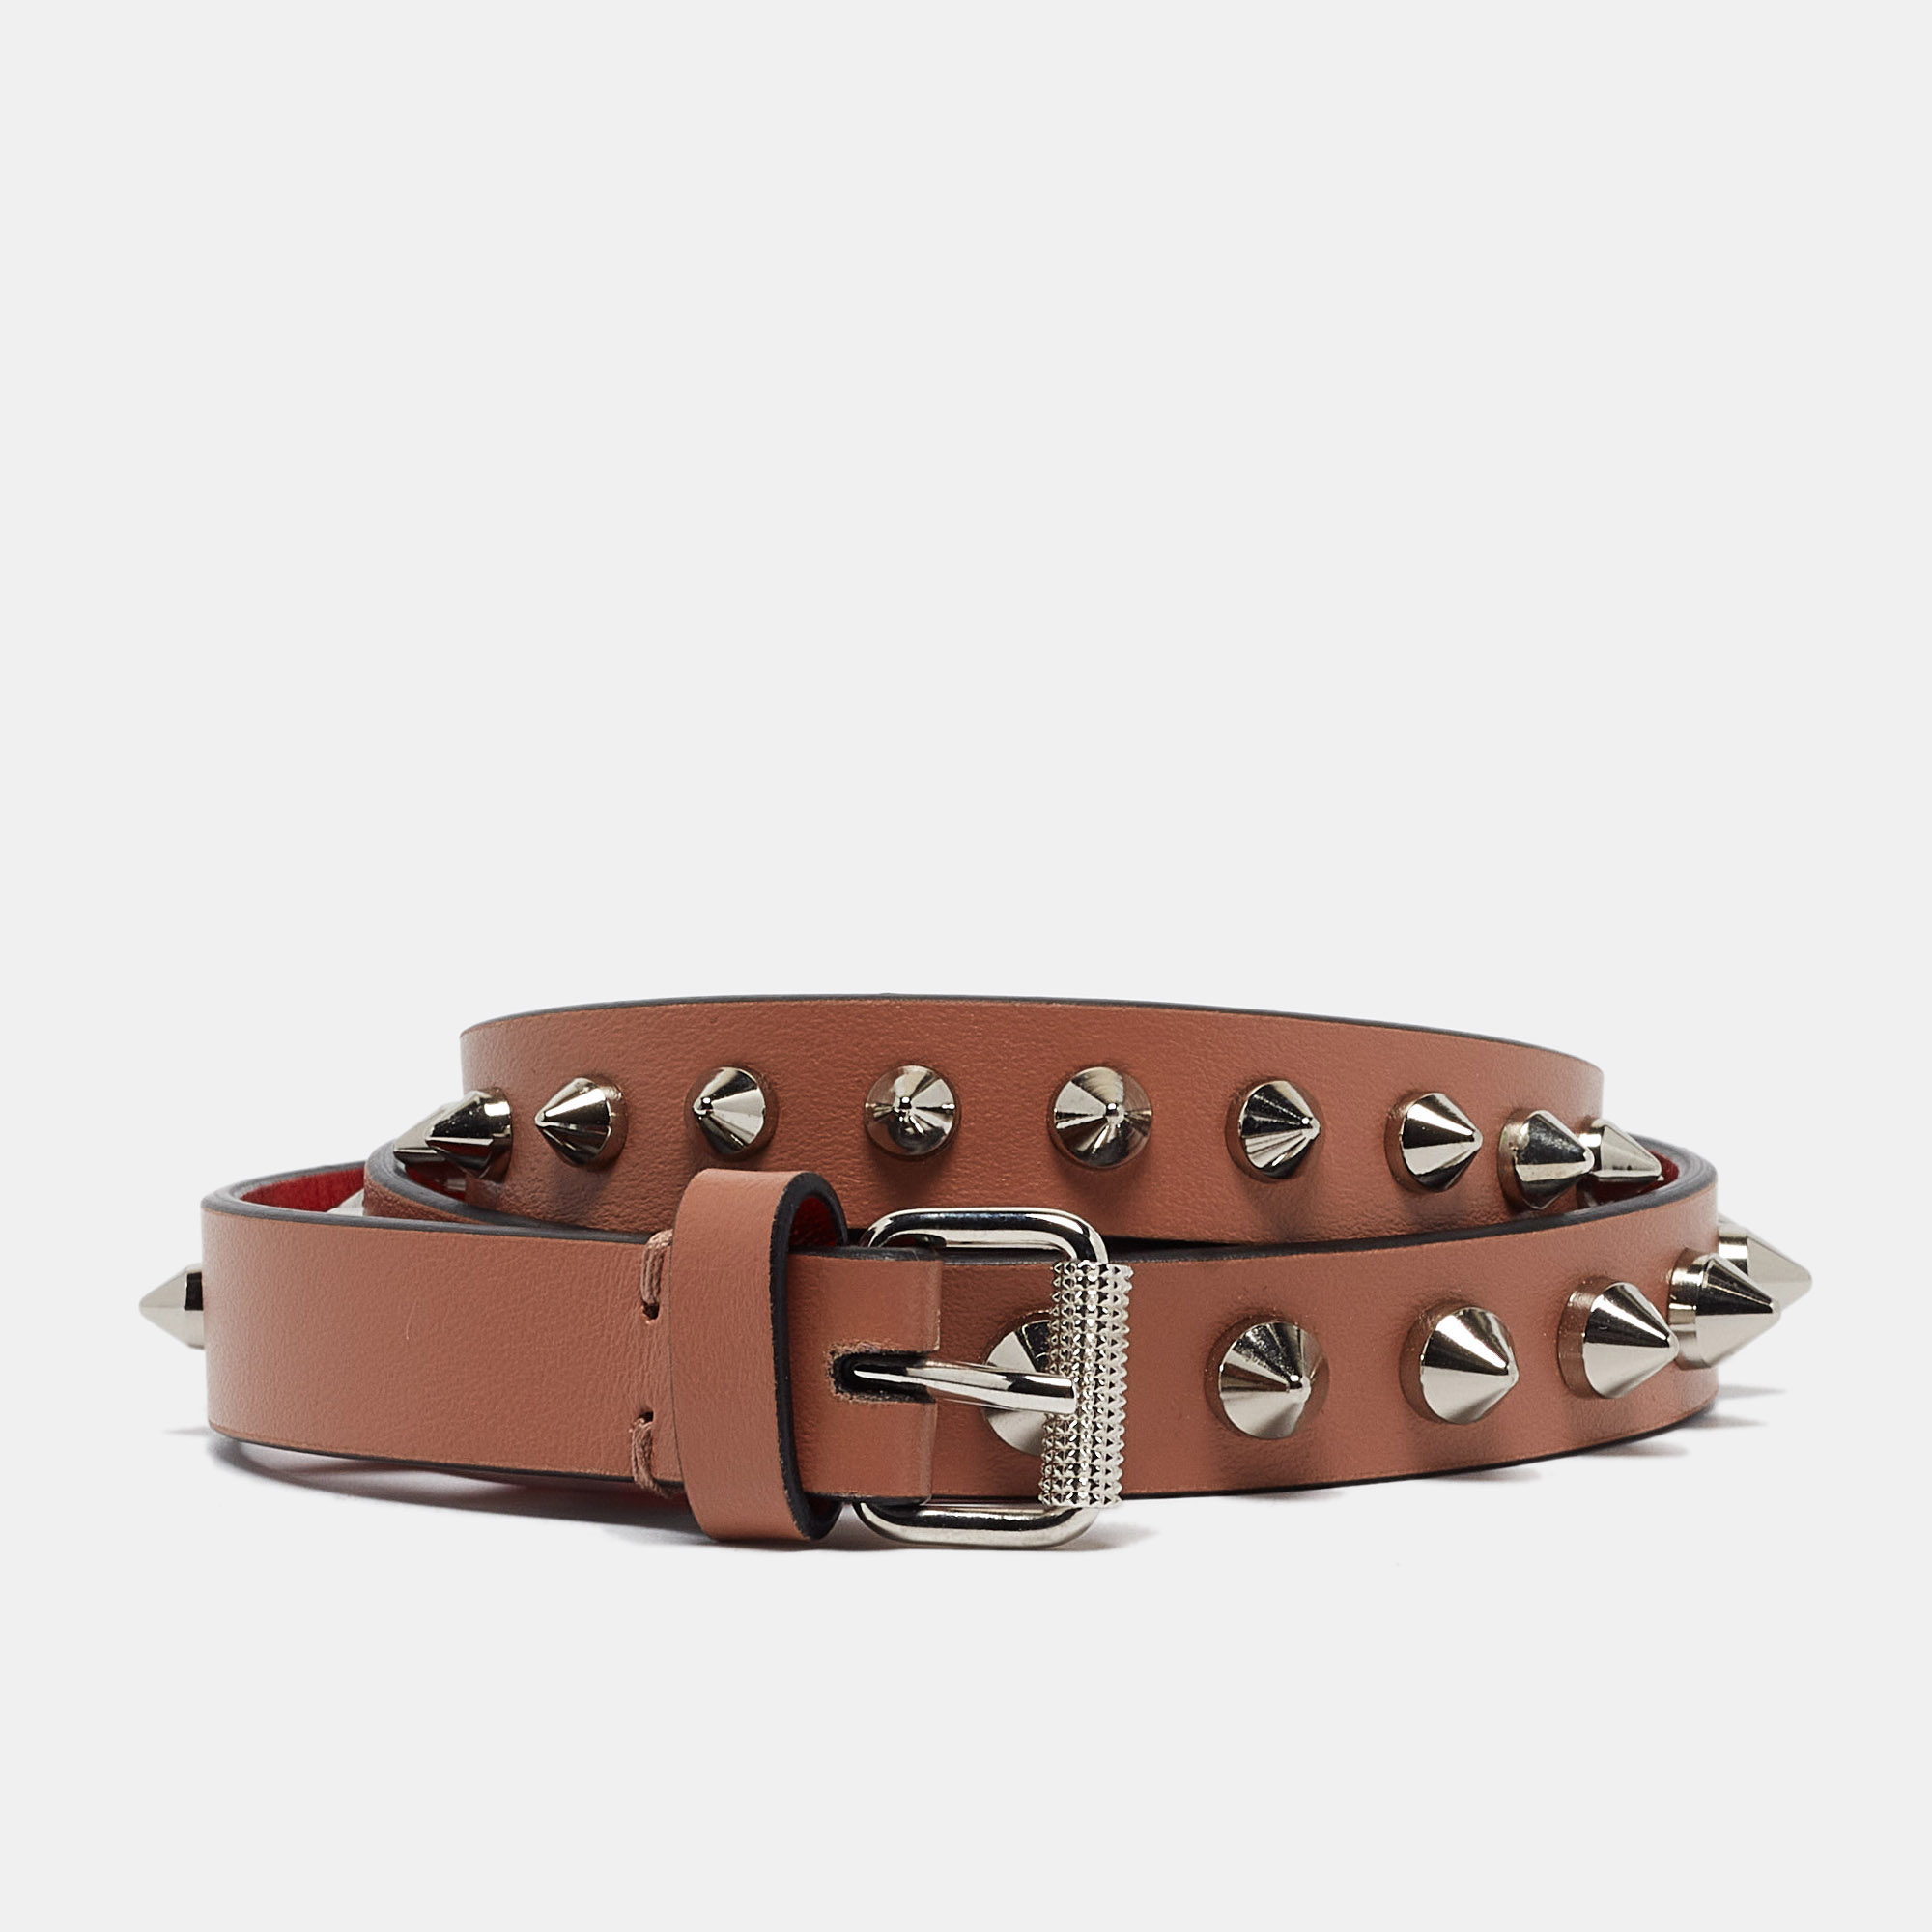 Christian louboutin beige leather spike slim buckle belt 70cm